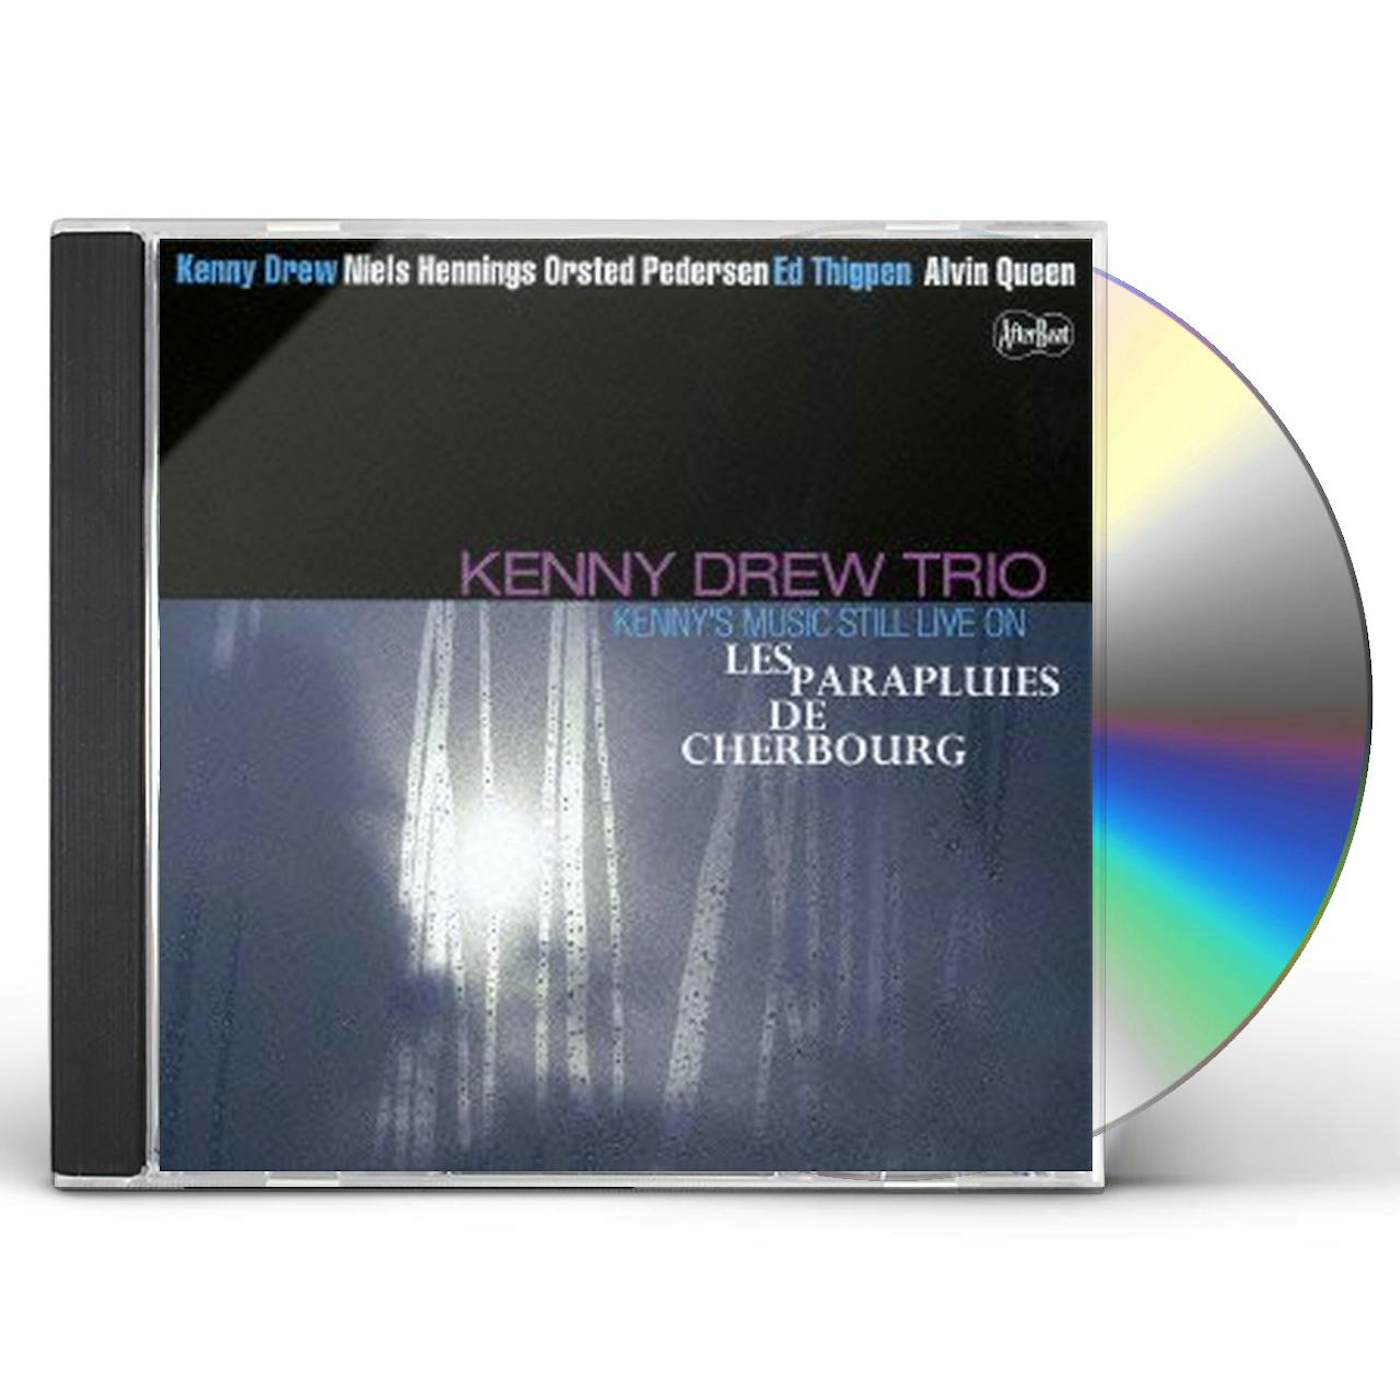 Kenny Drew MUSIC STILL LIVE ON LA PARAPLUIES CD